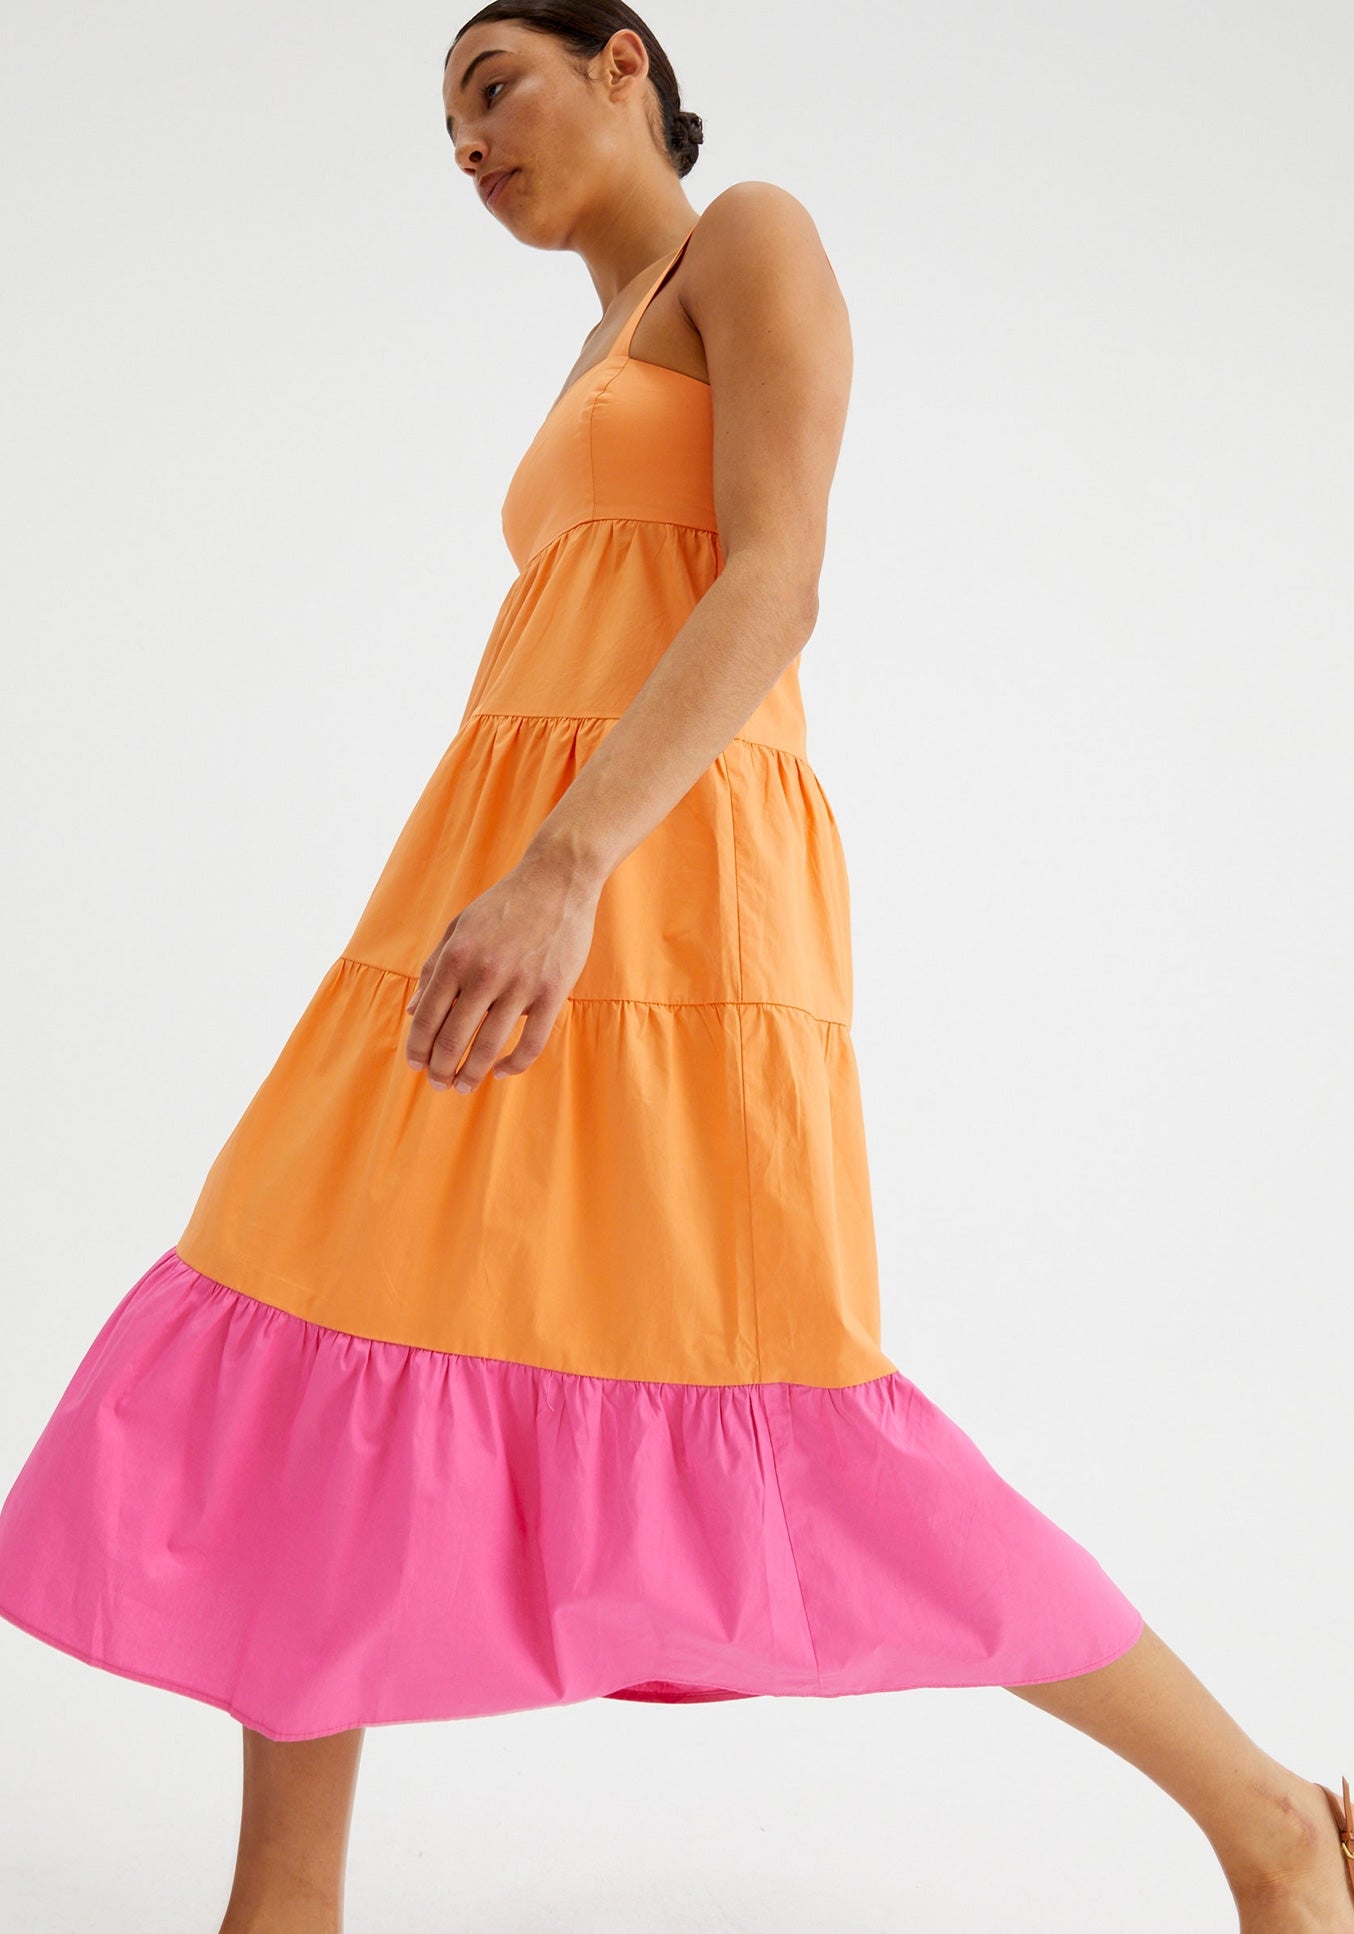 Compañia Fantastica - Pink & Orange Colour Block Summer Dress